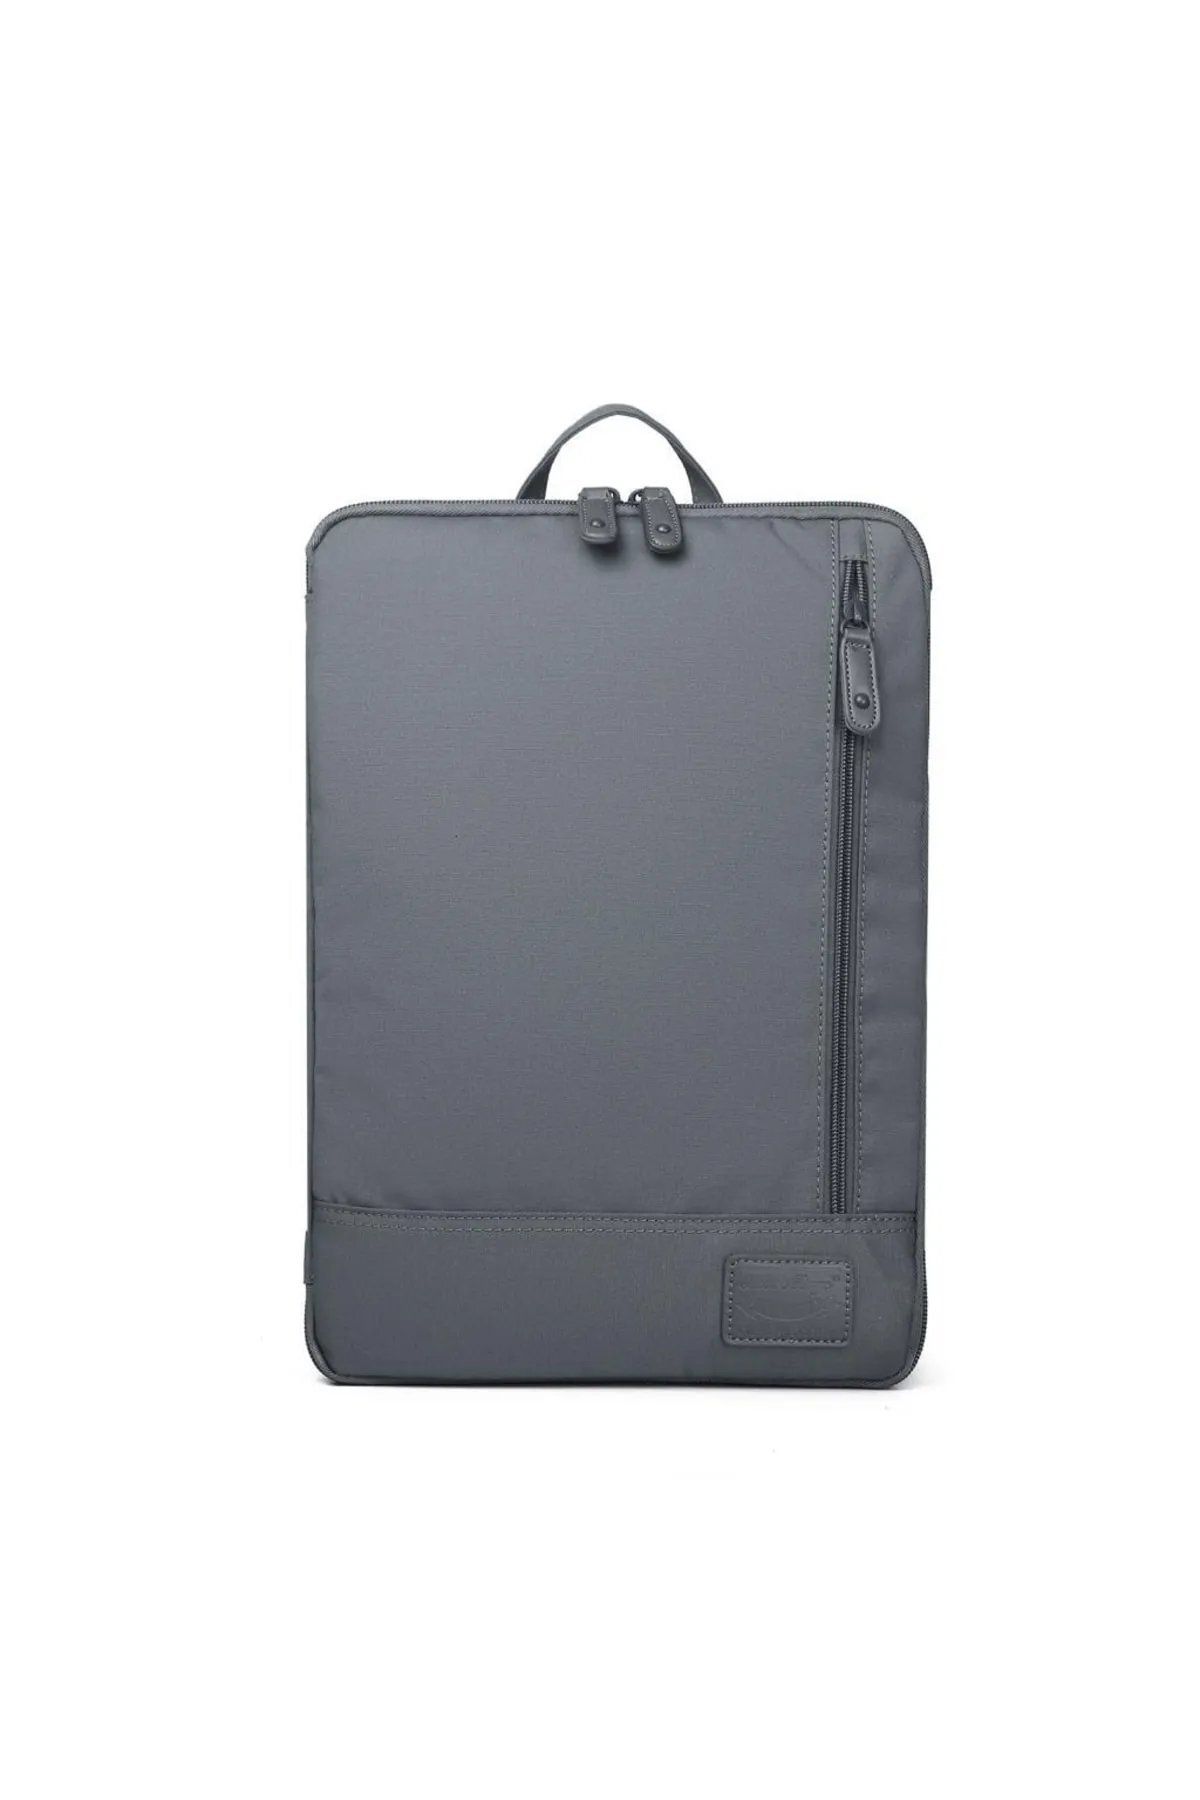 Smart Bags Unisex Macbook Air - Macbook Pro 13&13.3 İnç Uyumlu Laptop Kılıfı 3192